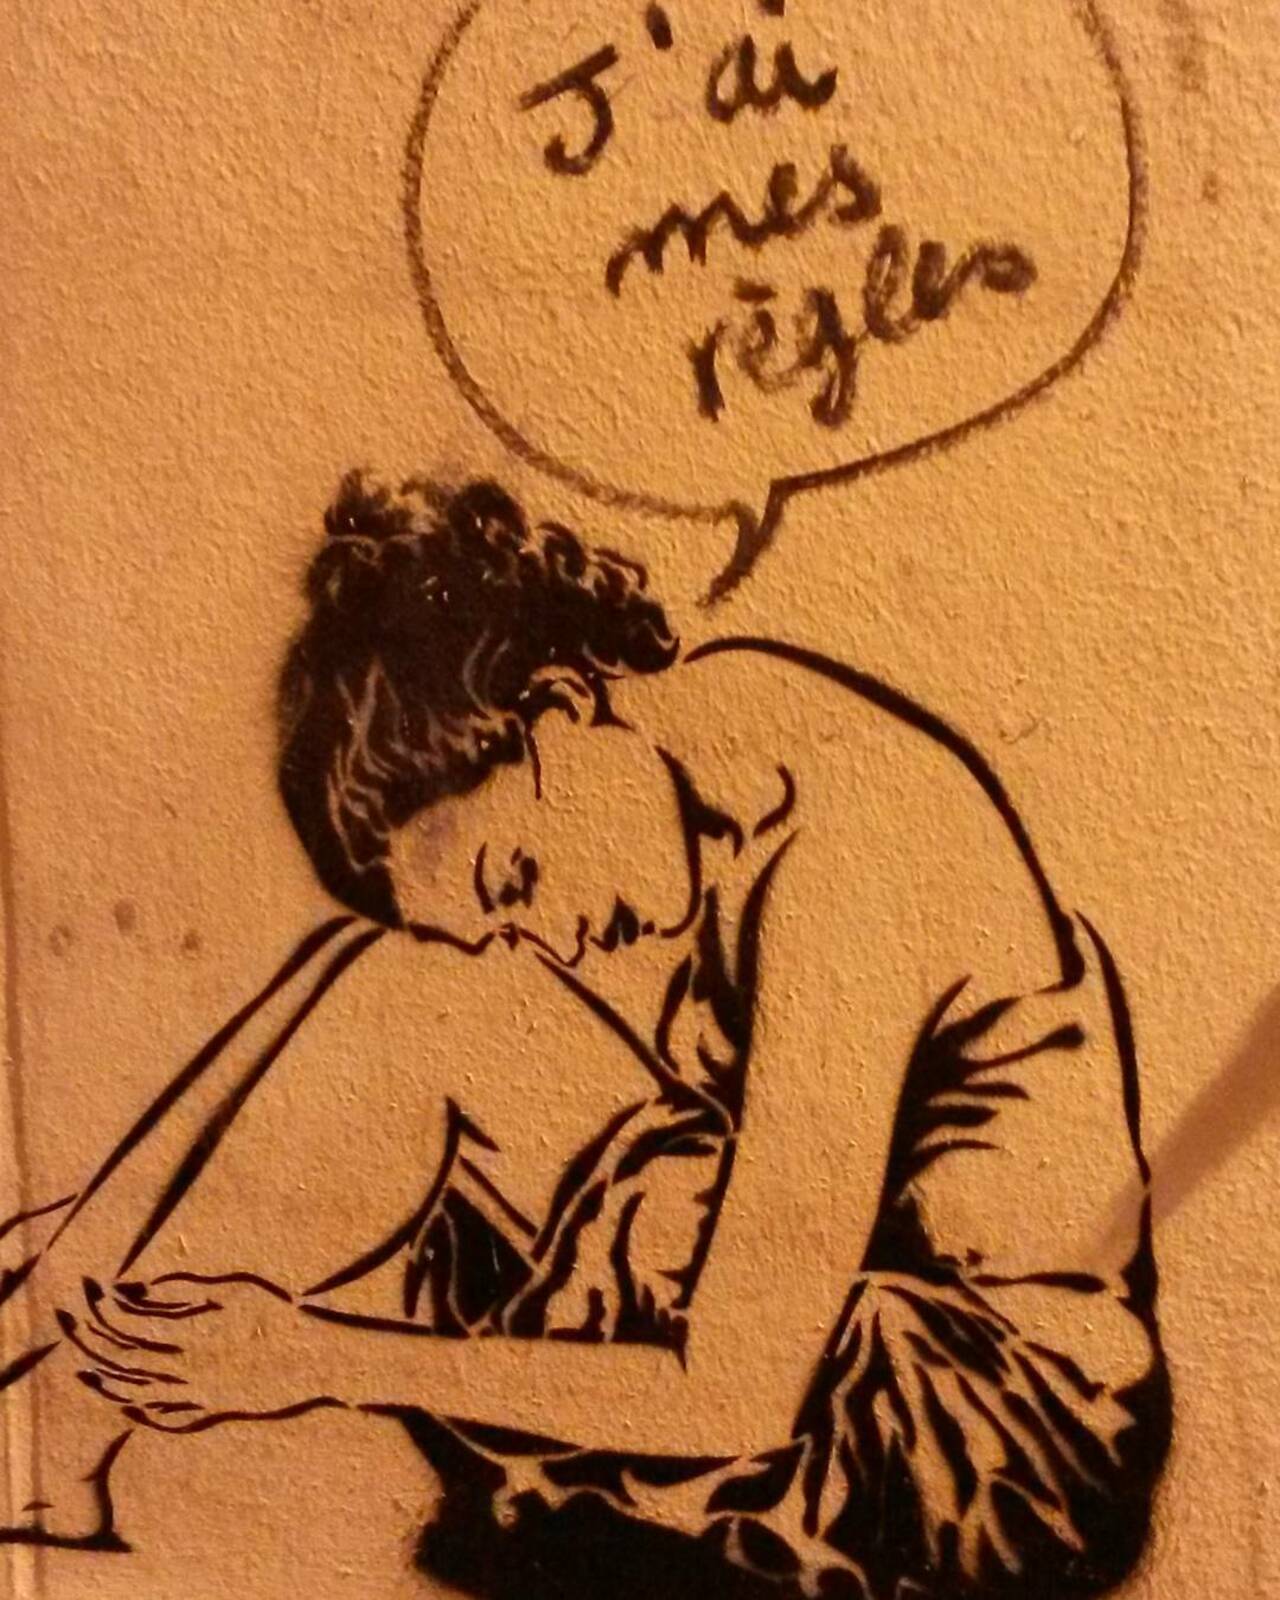 circumjacent_fr: #Paris #graffiti photo by le_cyclopede http://ift.tt/1O9KuuN #StreetArt http://t.co/qzCSKvyCZZ